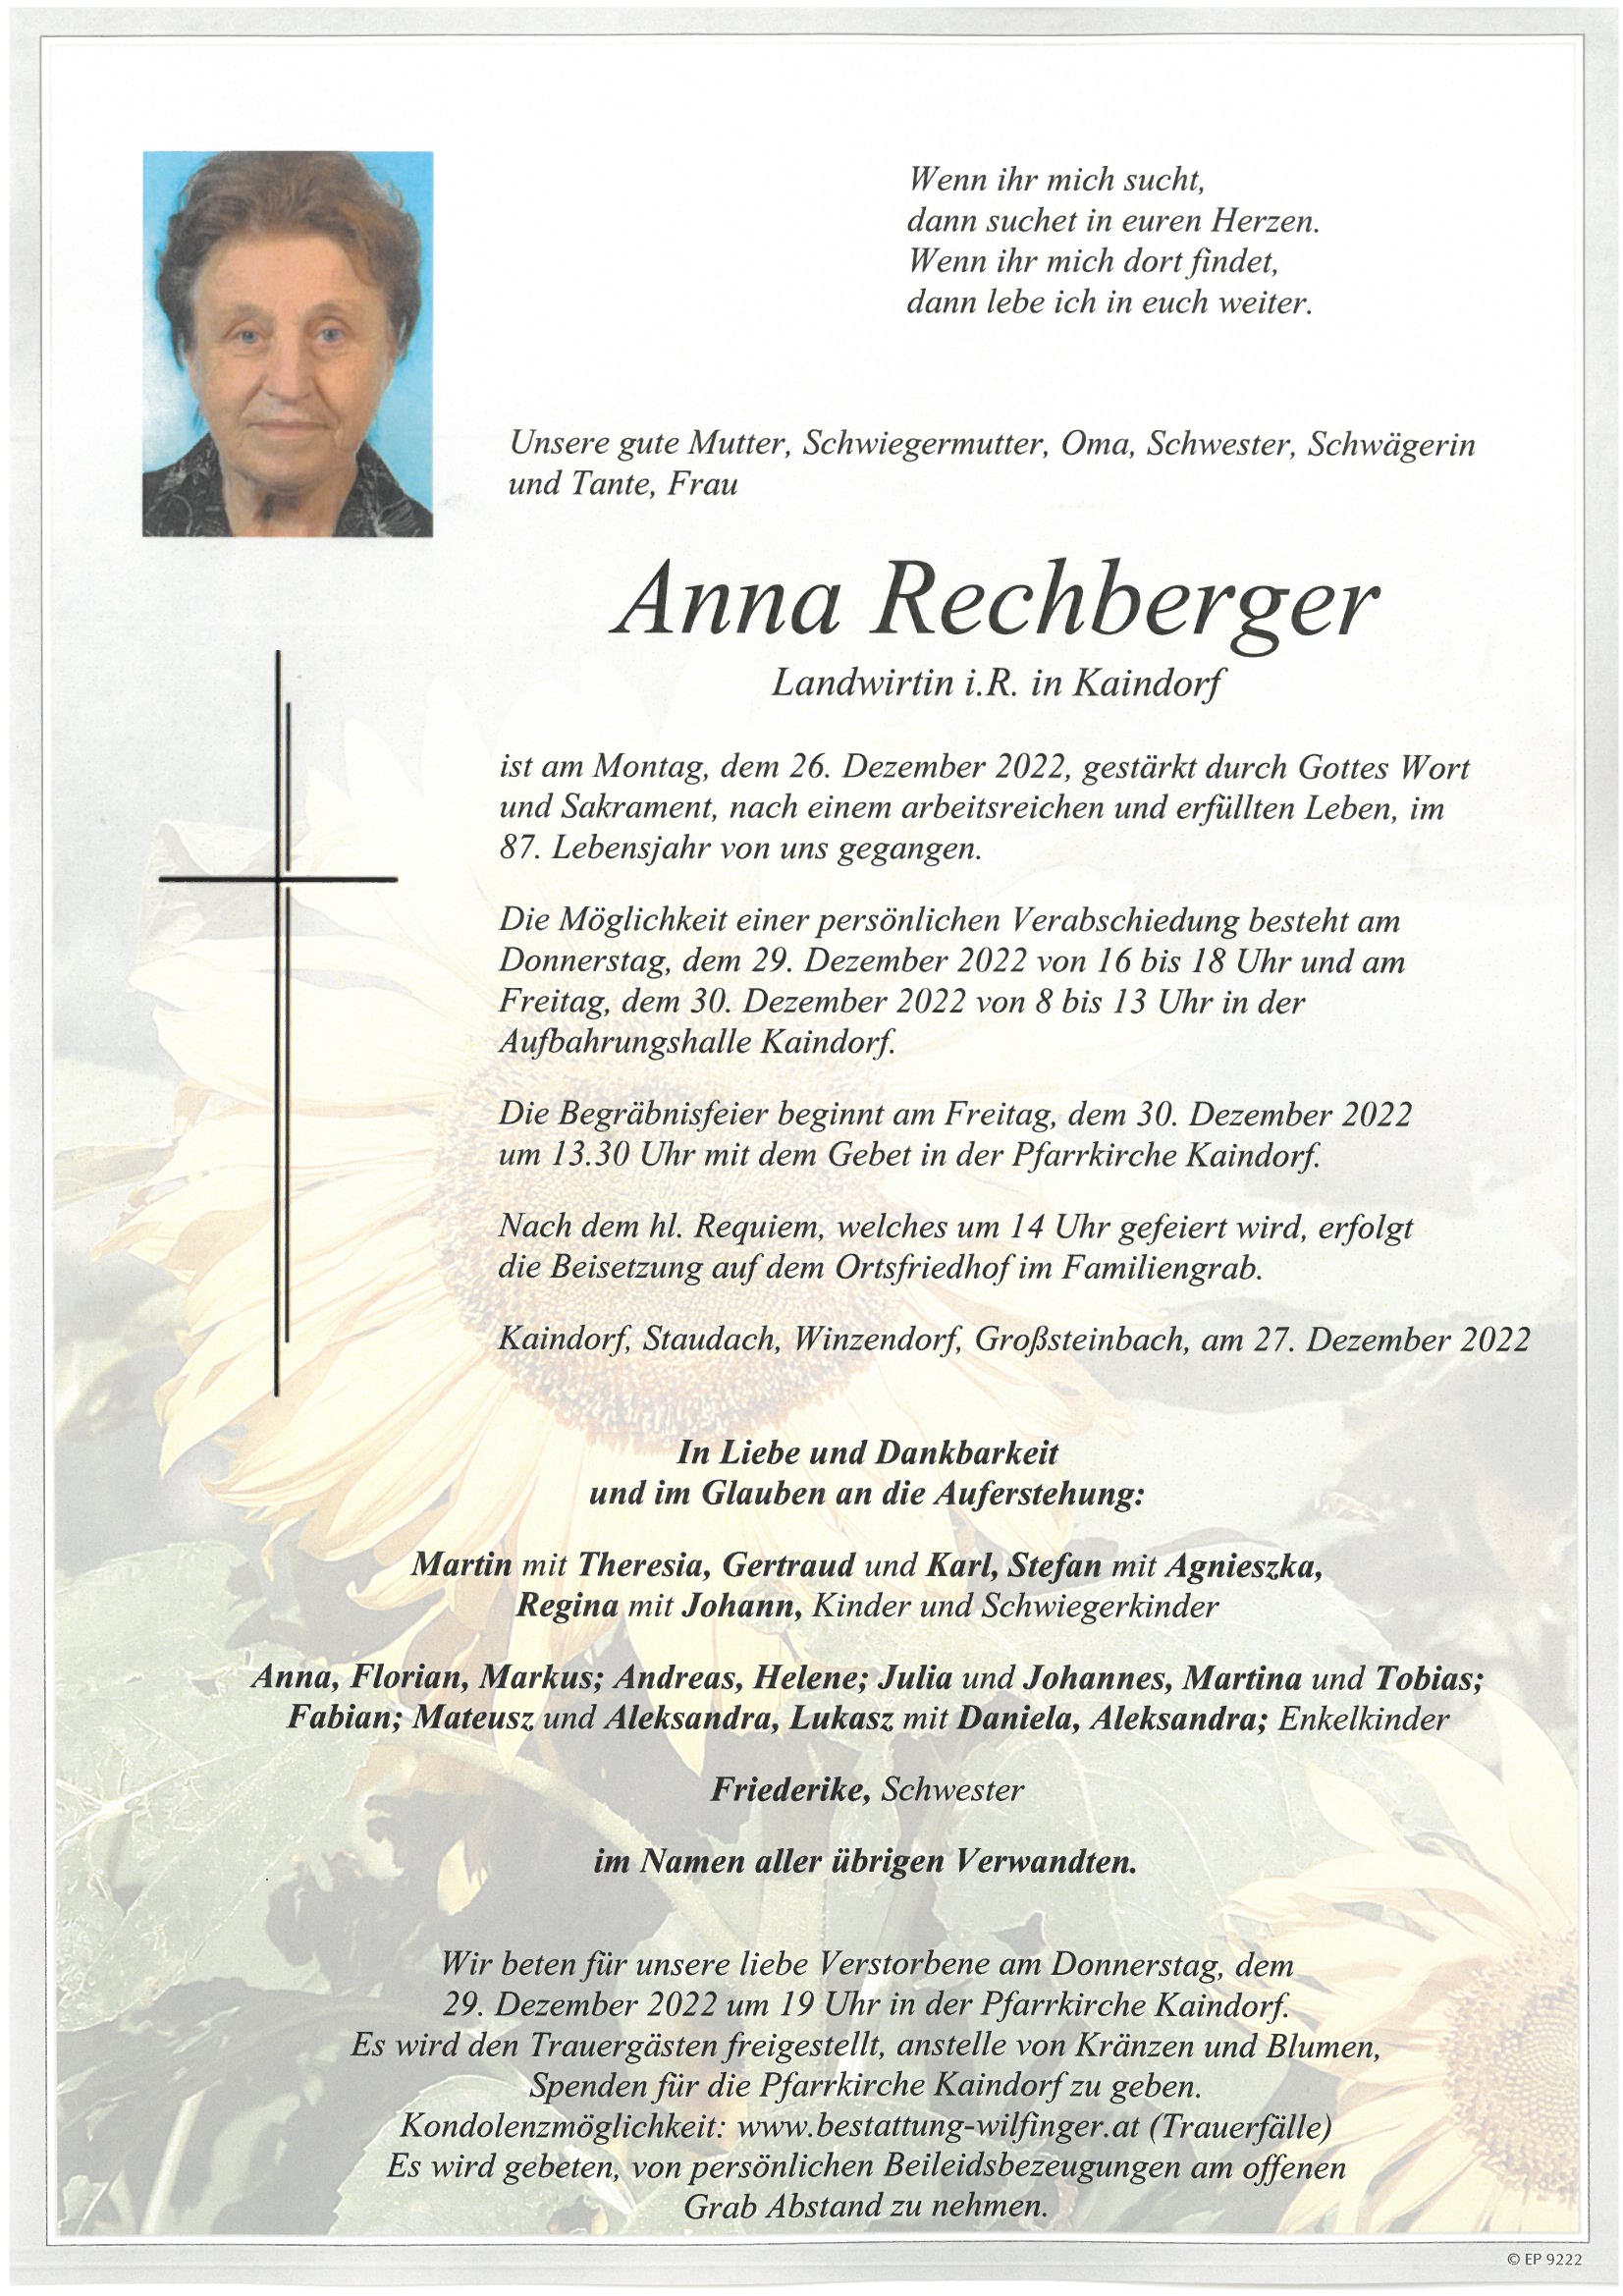 Anna Rechberger, Kaindorf